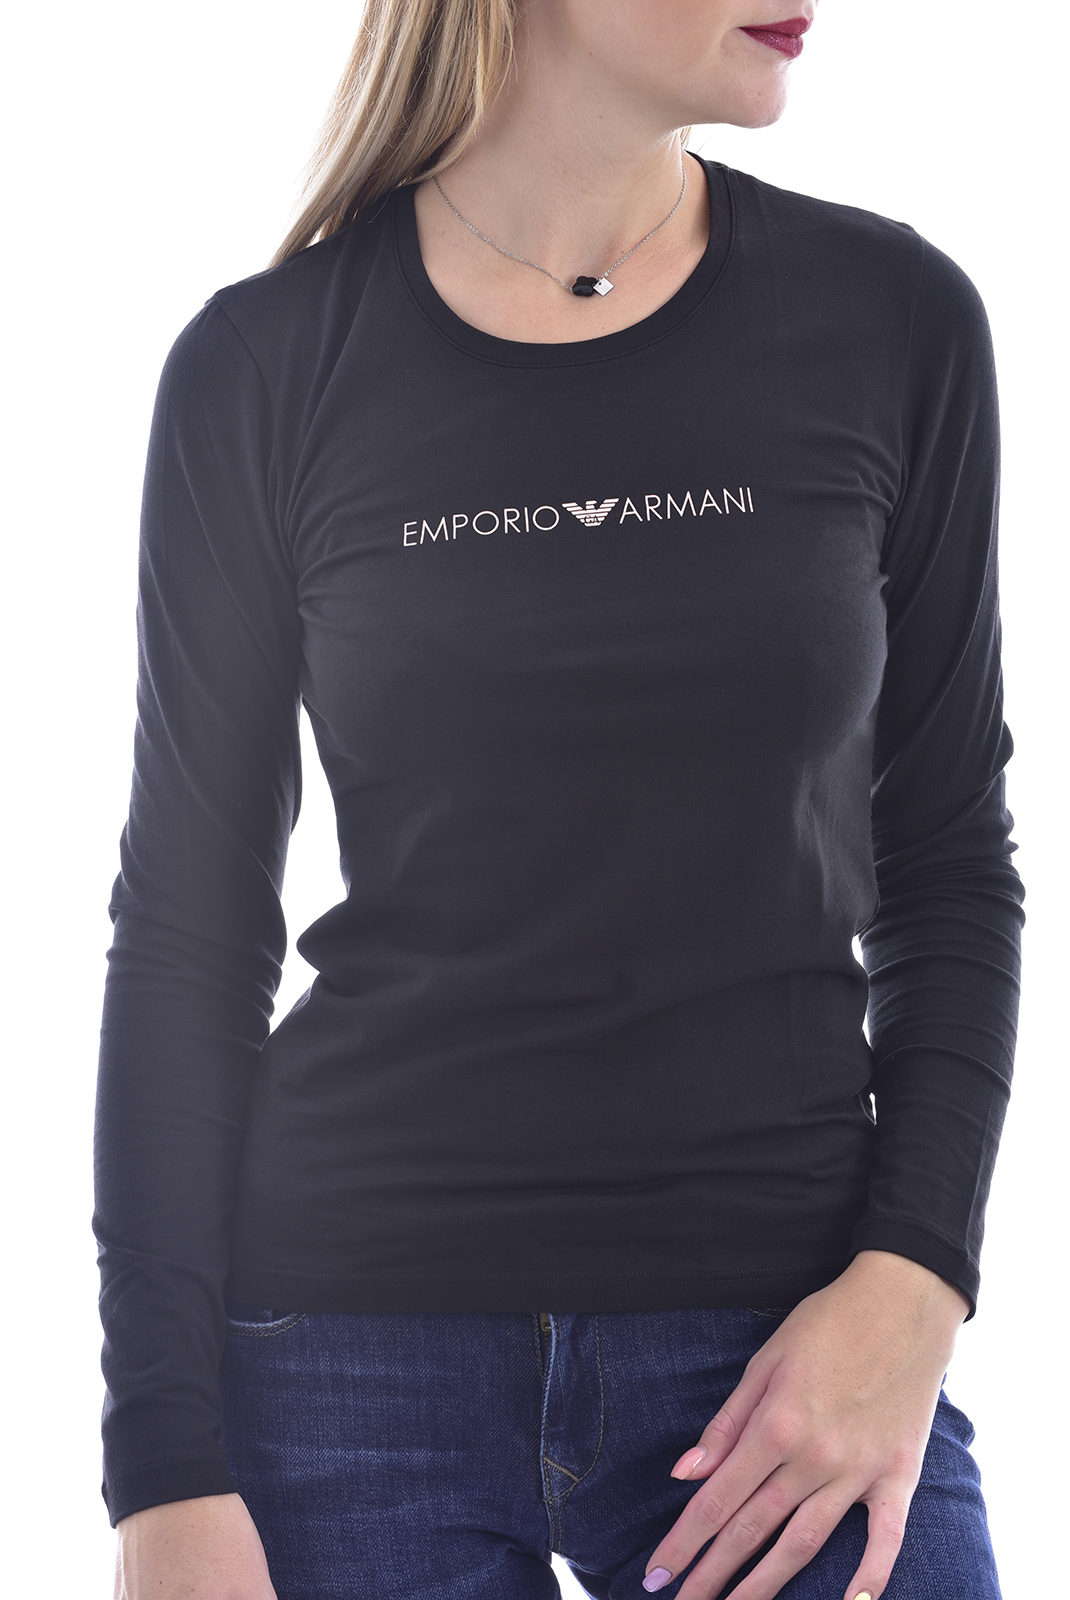 Emporio Armani Tee-shirt Noir À Manches Longues 163229 0a219 